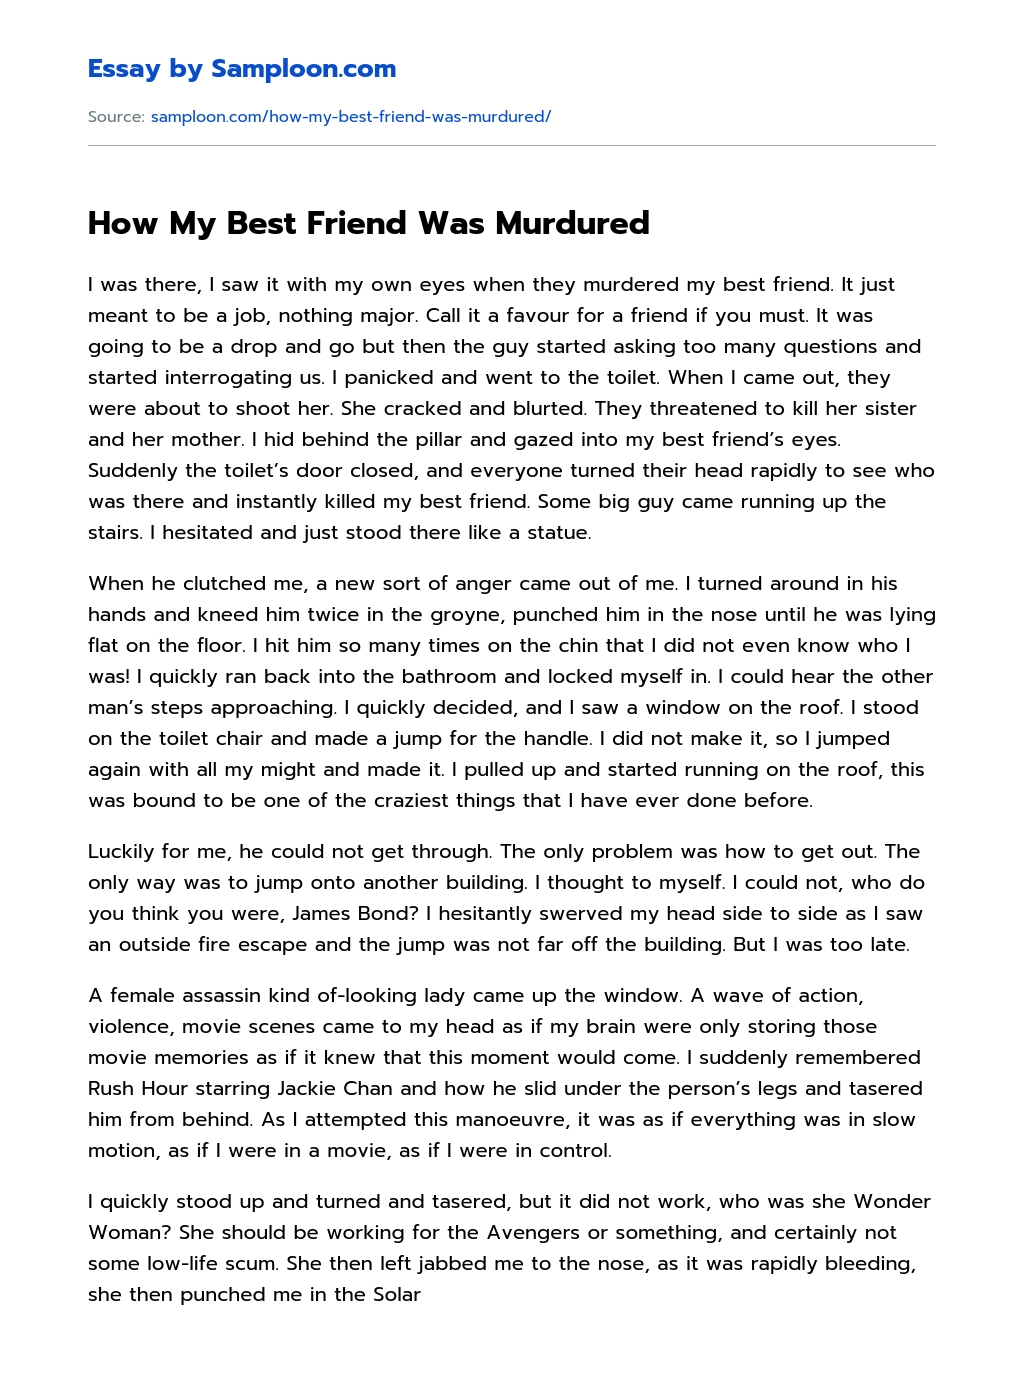 How My Best Friend Was Murdured essay